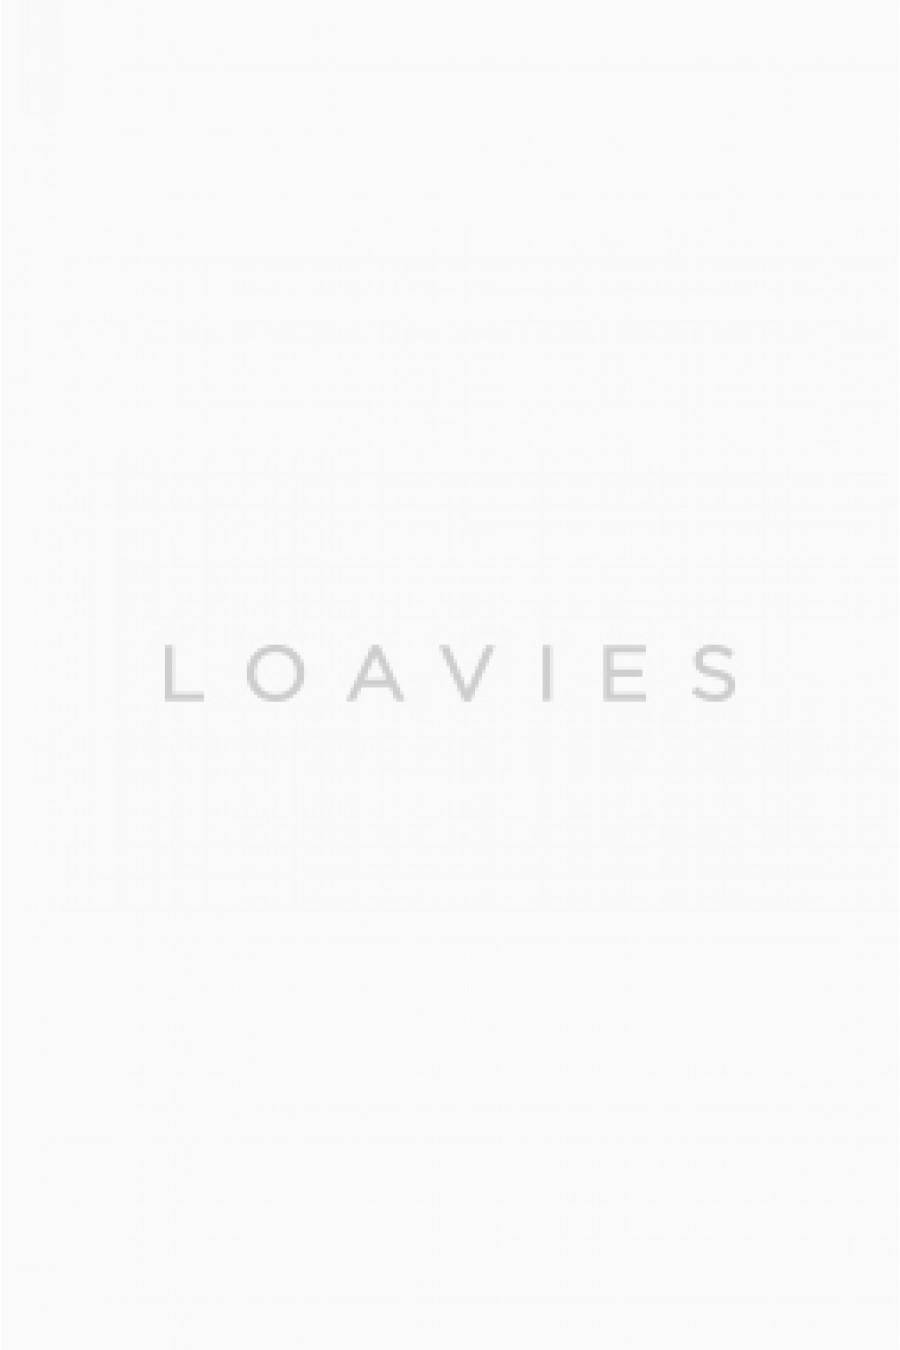 https://loavies-assets.com/media/catalog/product/1/3/13500010100-1_V1.jpg